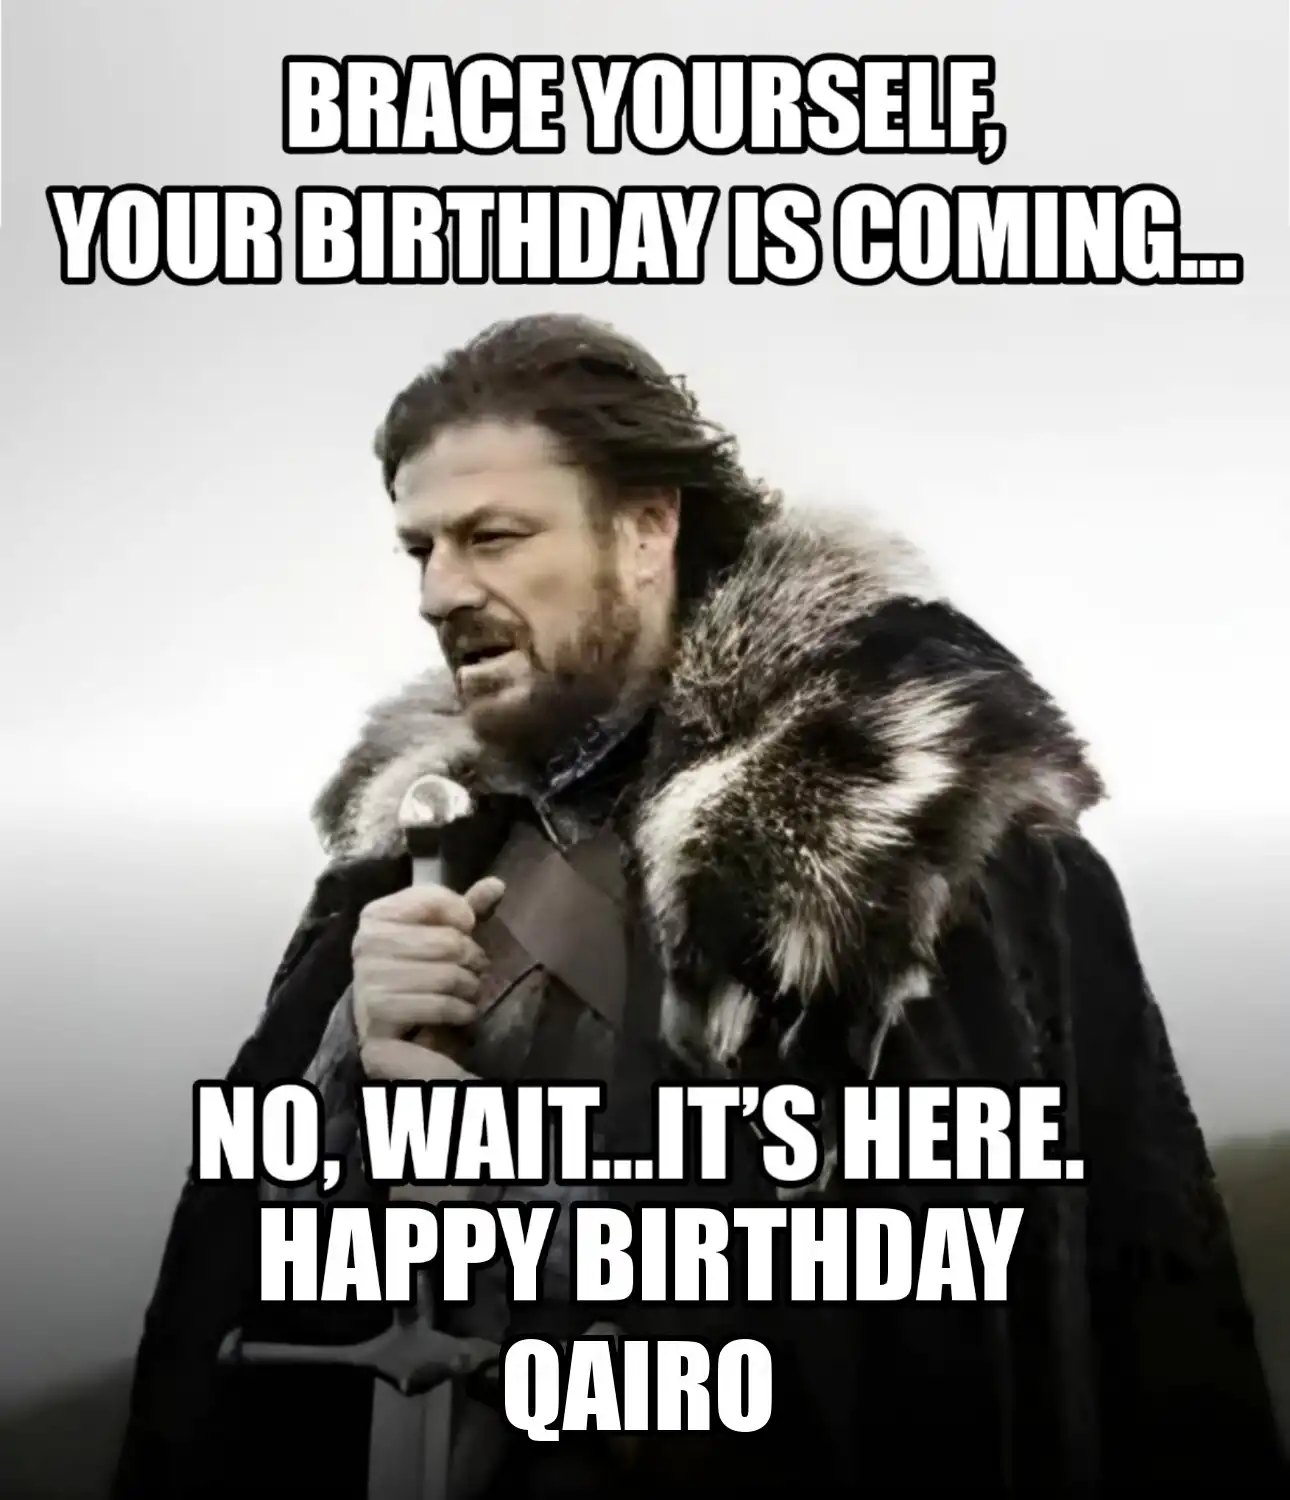 Happy Birthday Qairo Brace Yourself Your Birthday Is Coming Meme